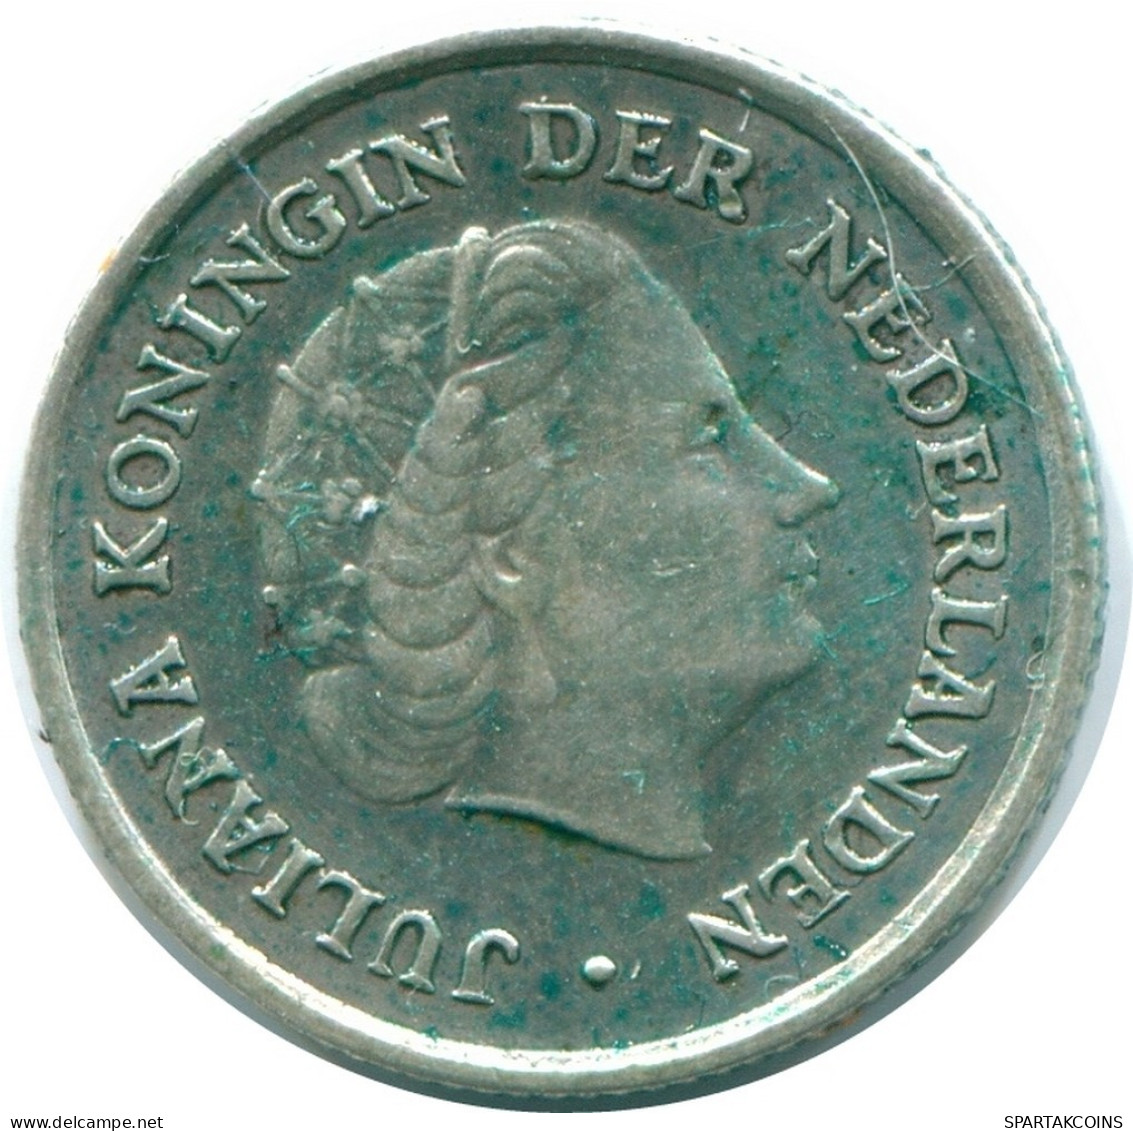 1/10 GULDEN 1960 NETHERLANDS ANTILLES SILVER Colonial Coin #NL12279.3.U.A - Netherlands Antilles